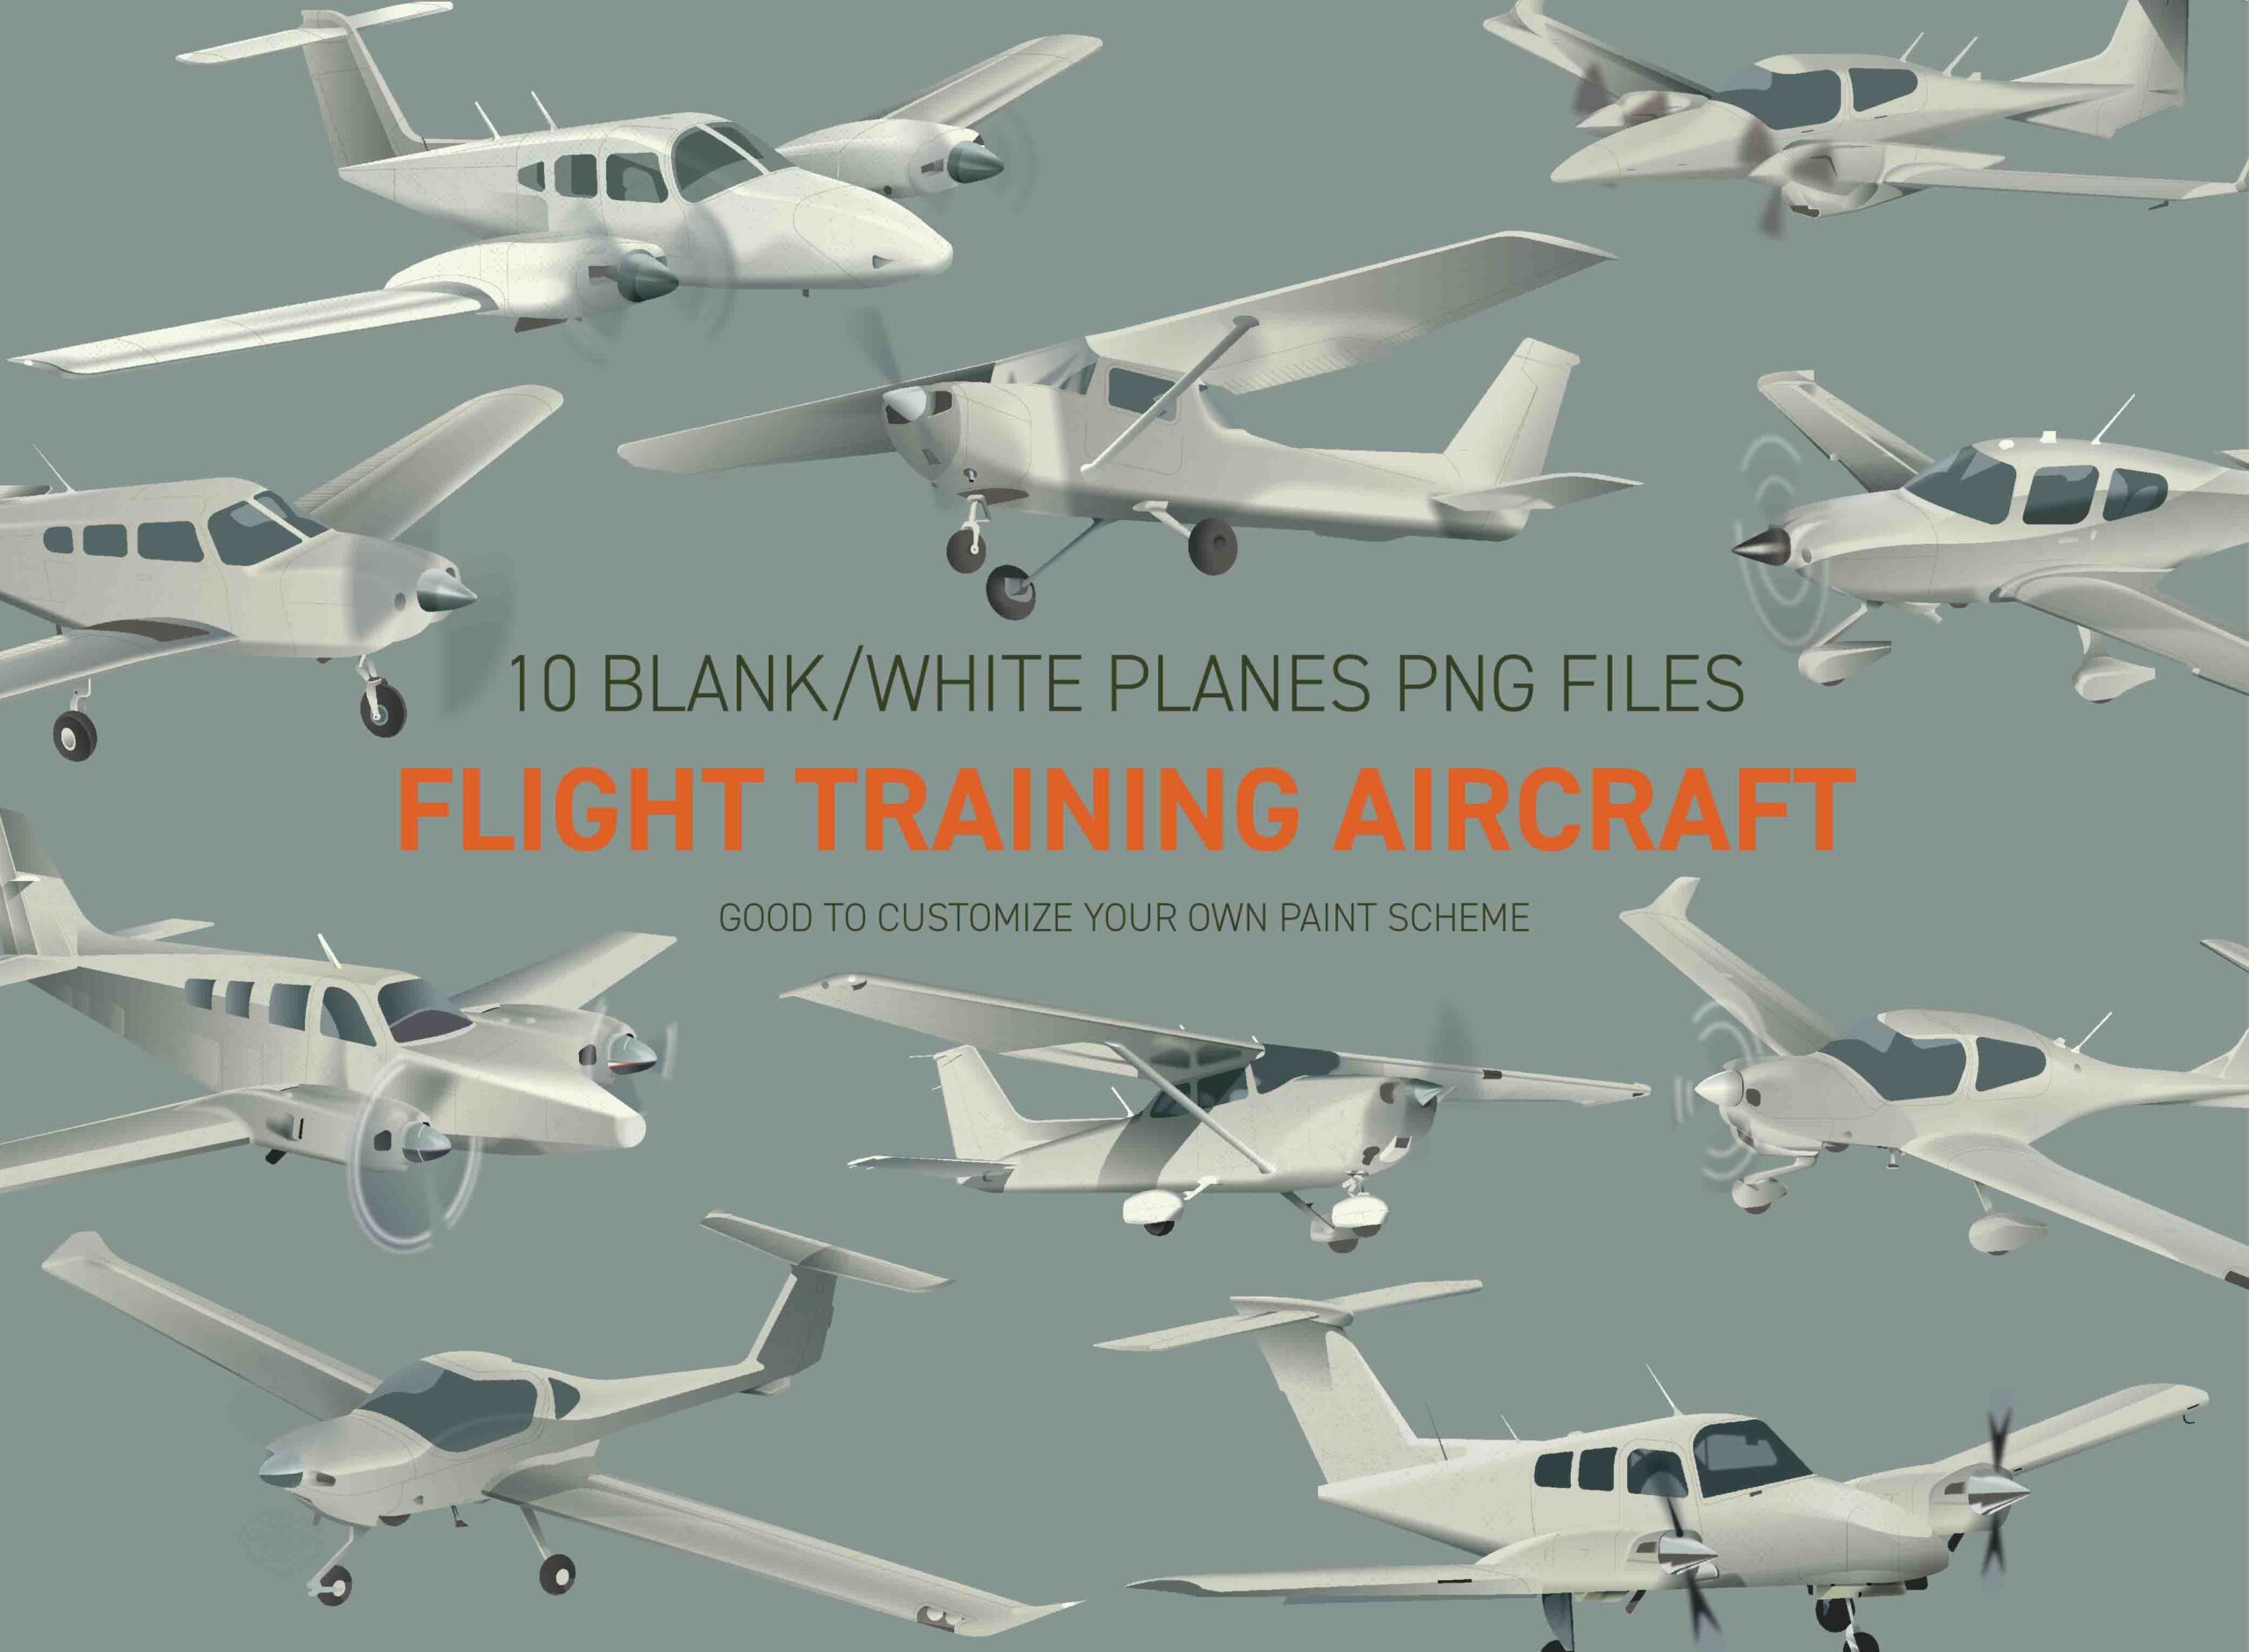 Aircraft-listing-lelinhtdigitals_blank-white-training-aircraft-airplane-clip-arts-png-files